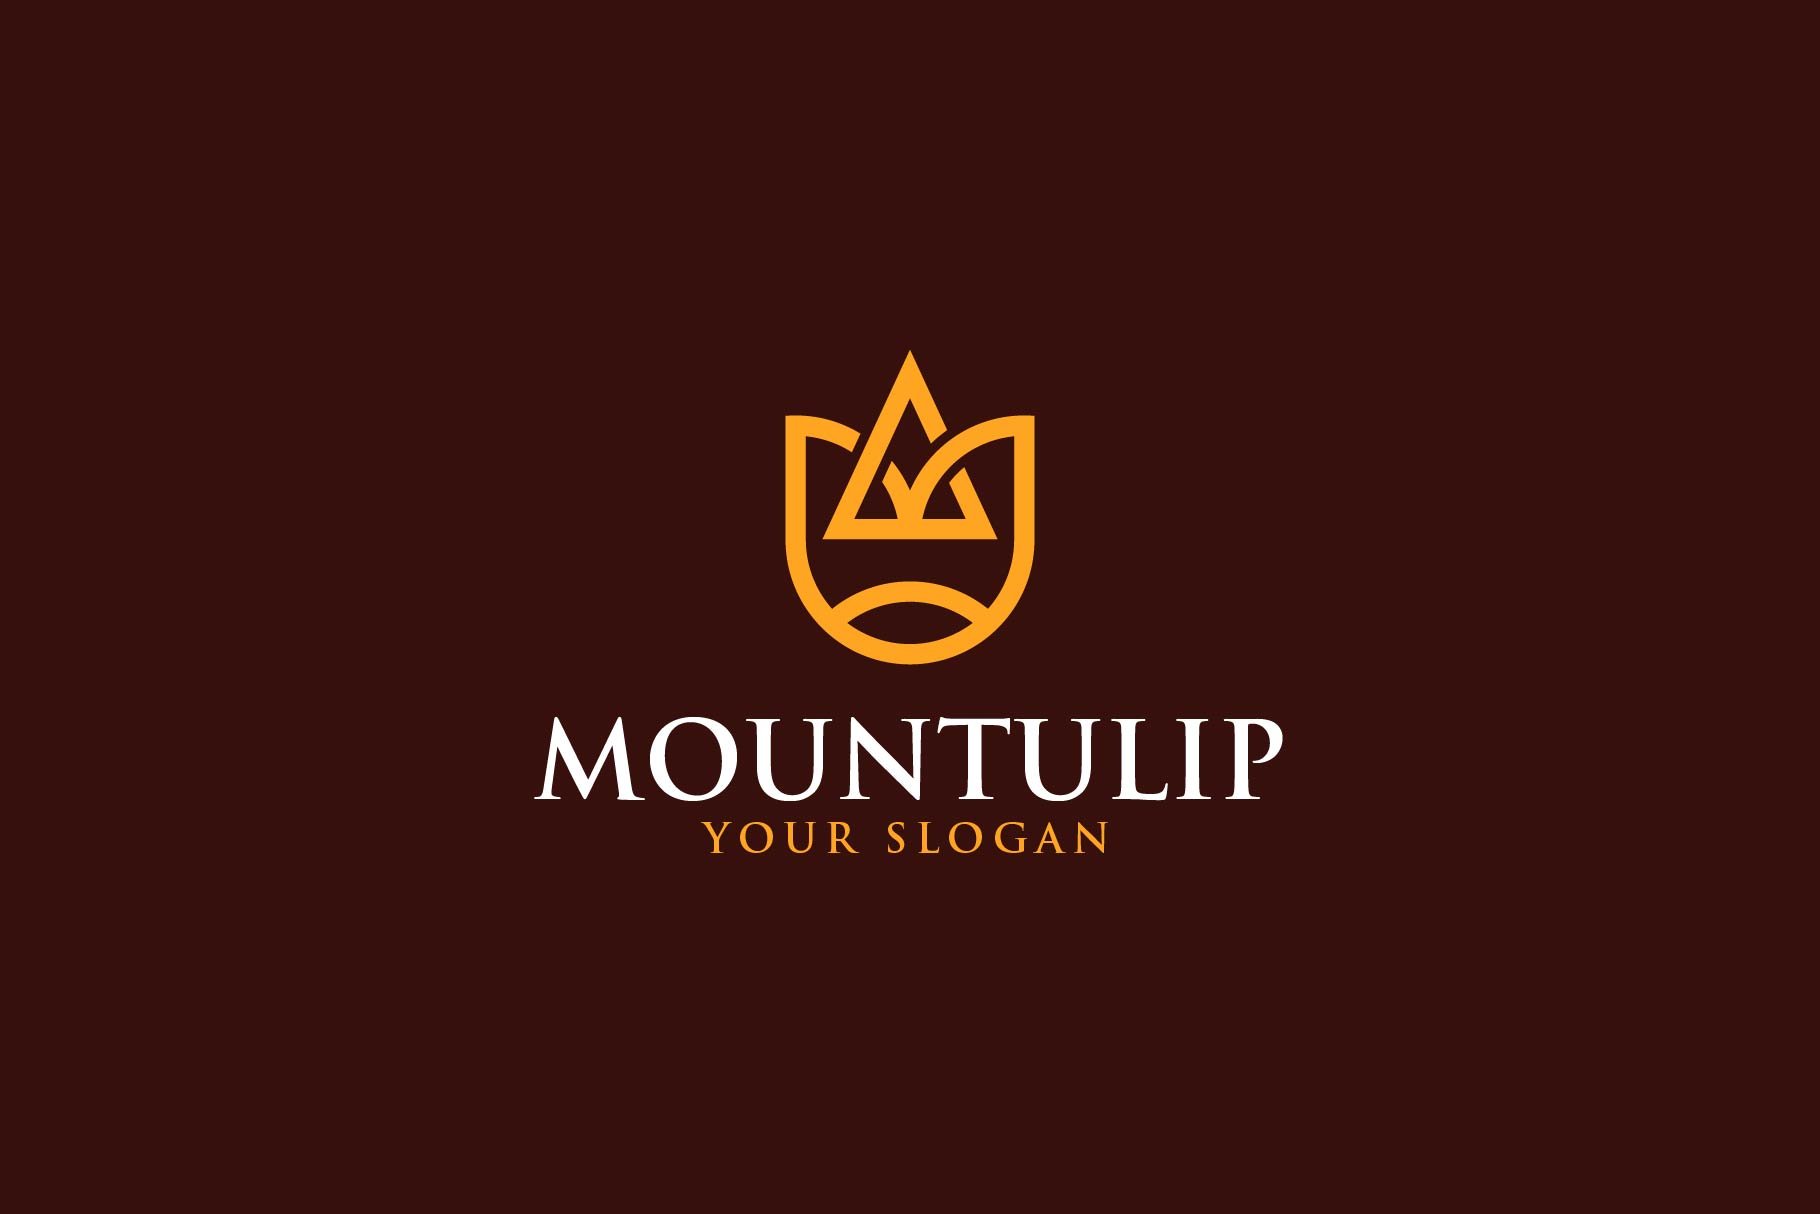 Tulip Logo cover image.